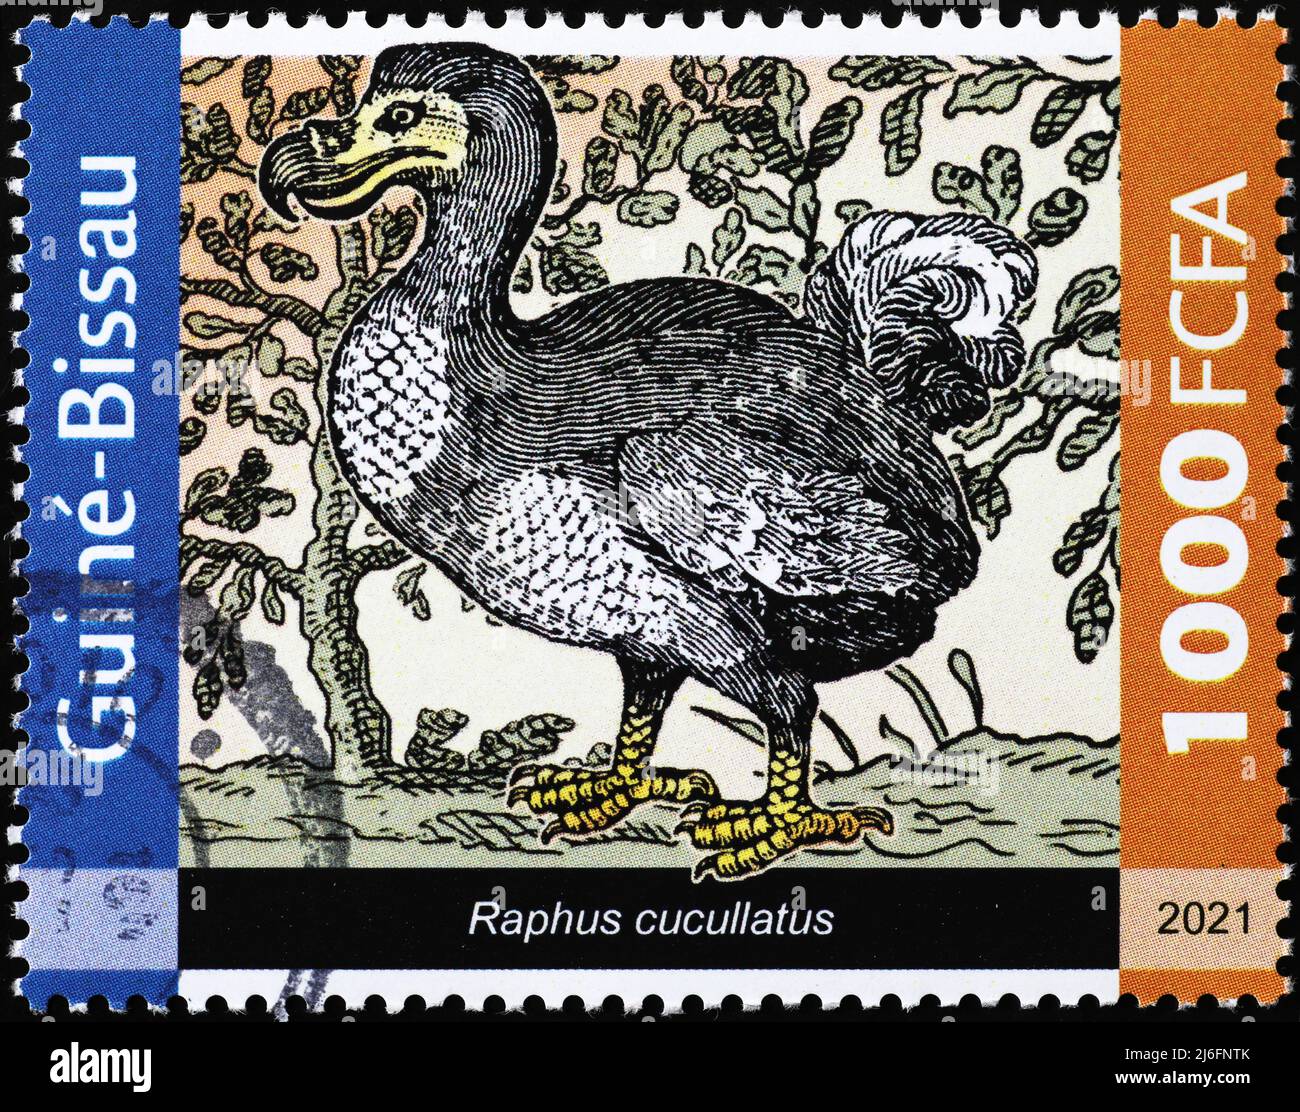 Dodo, extinct bird, on postage stamp Stock Photo